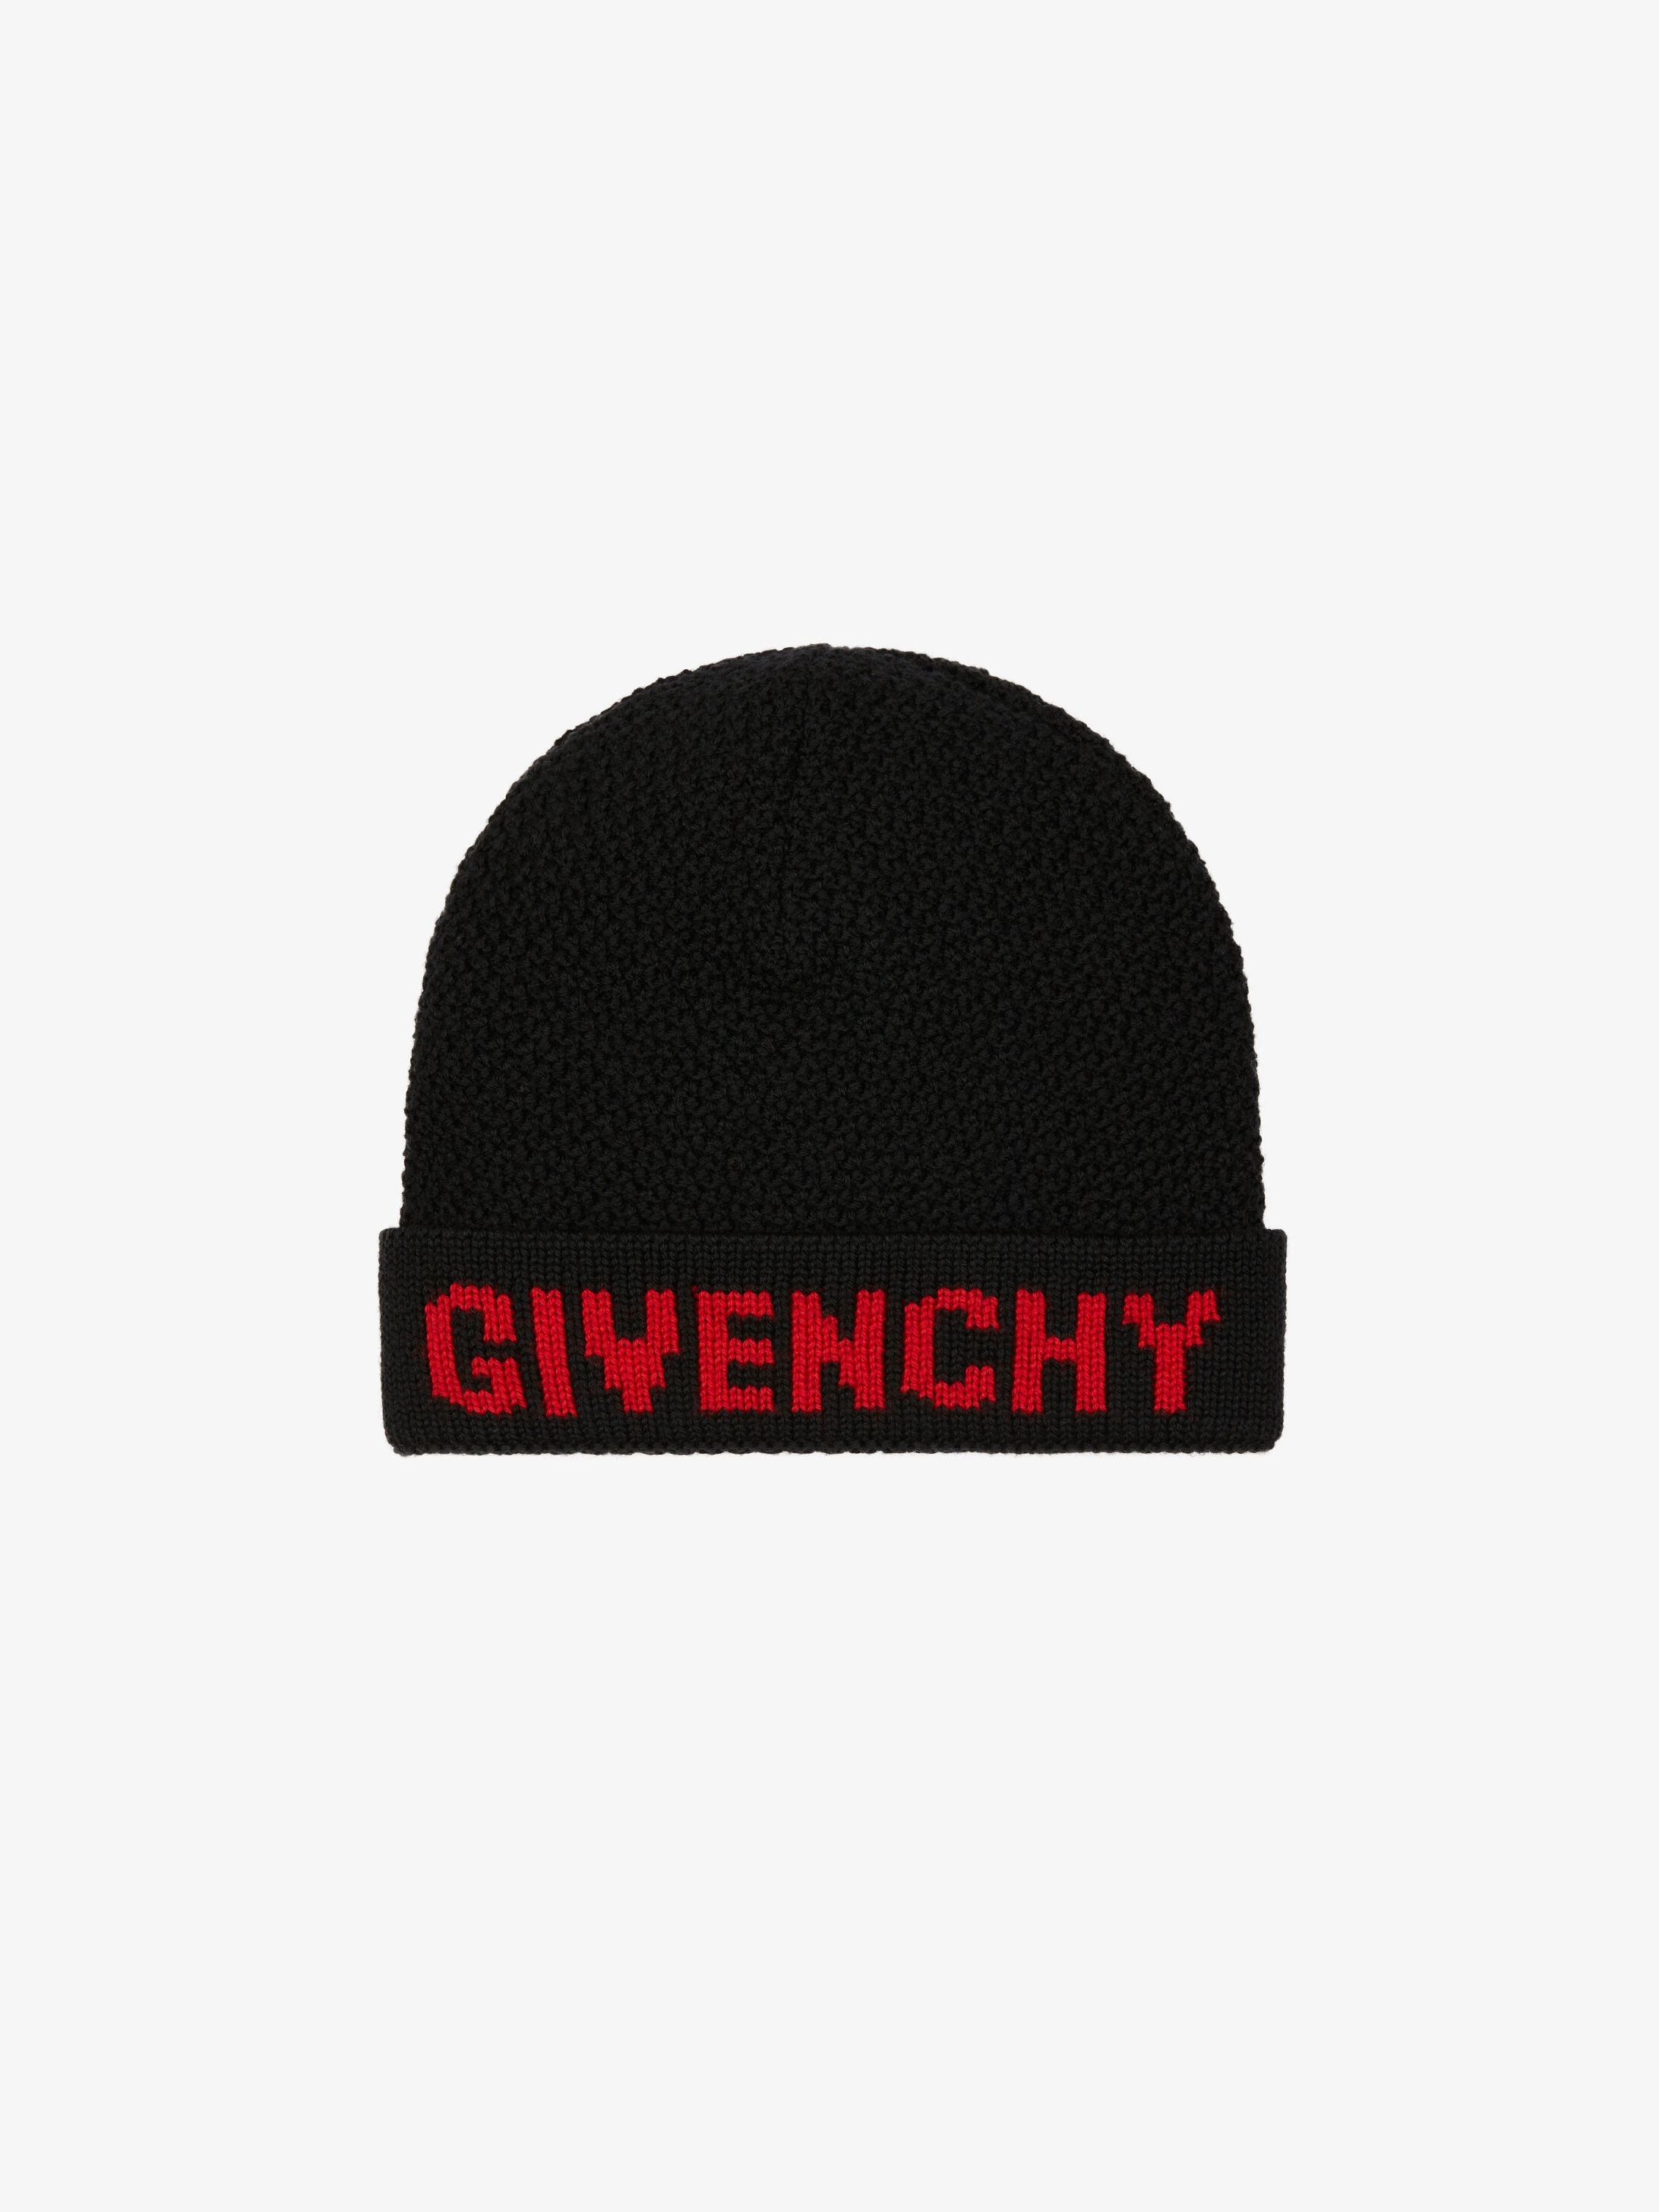 Givenchy logo cap | GIVENCHY Paris